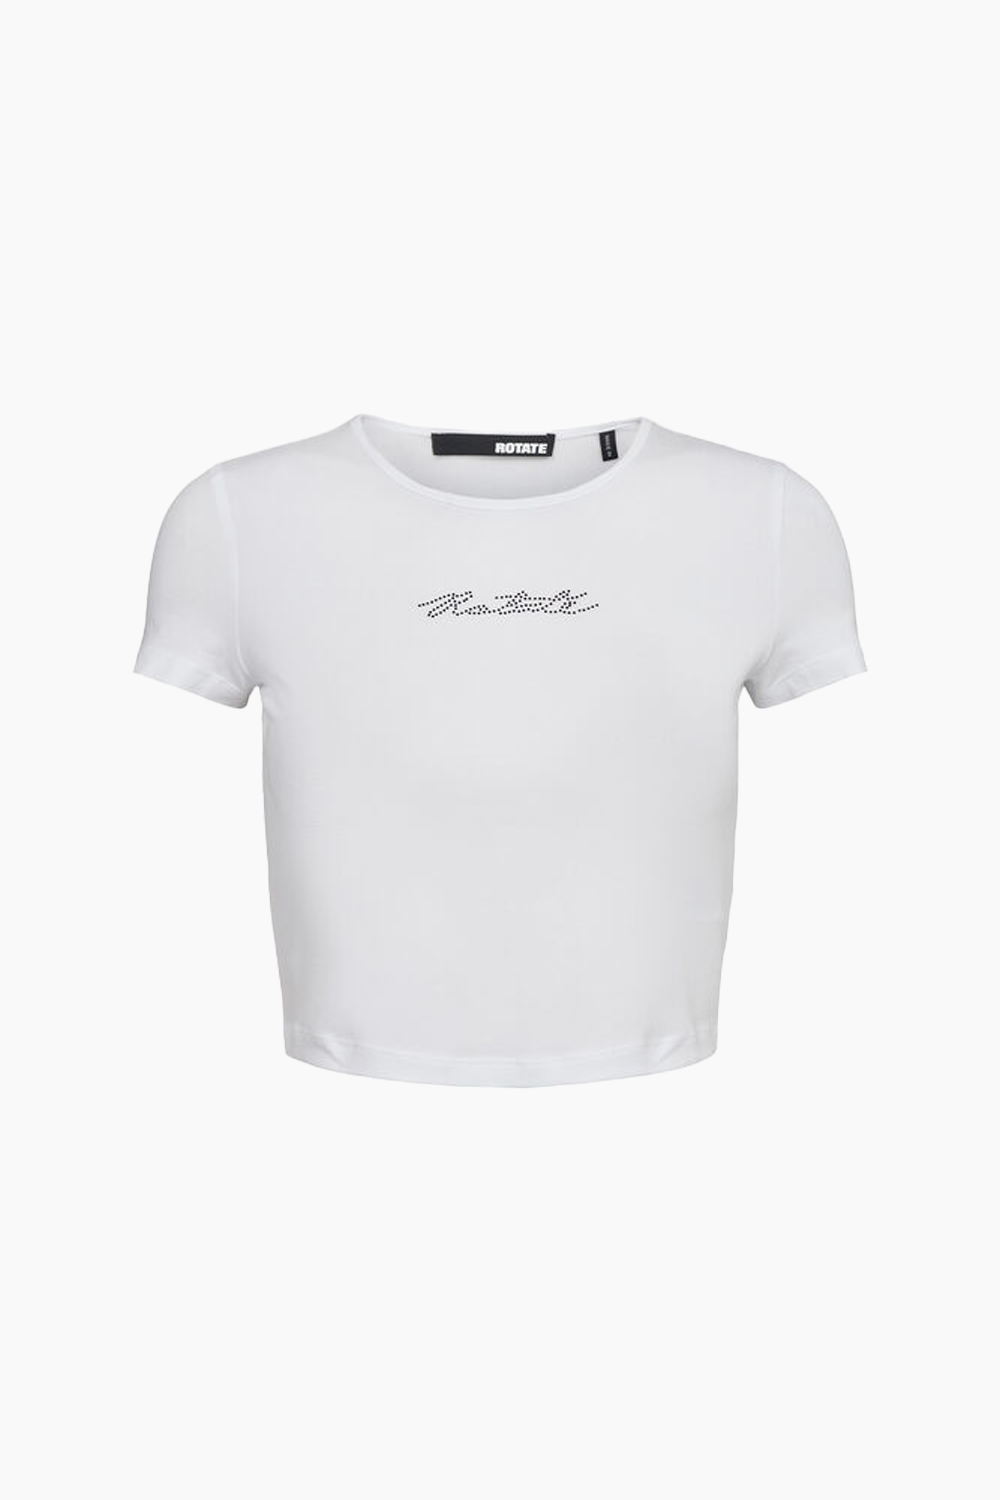 Se Cropped T-shirt - Bright White - ROTATE - Hvid S hos QNTS.dk